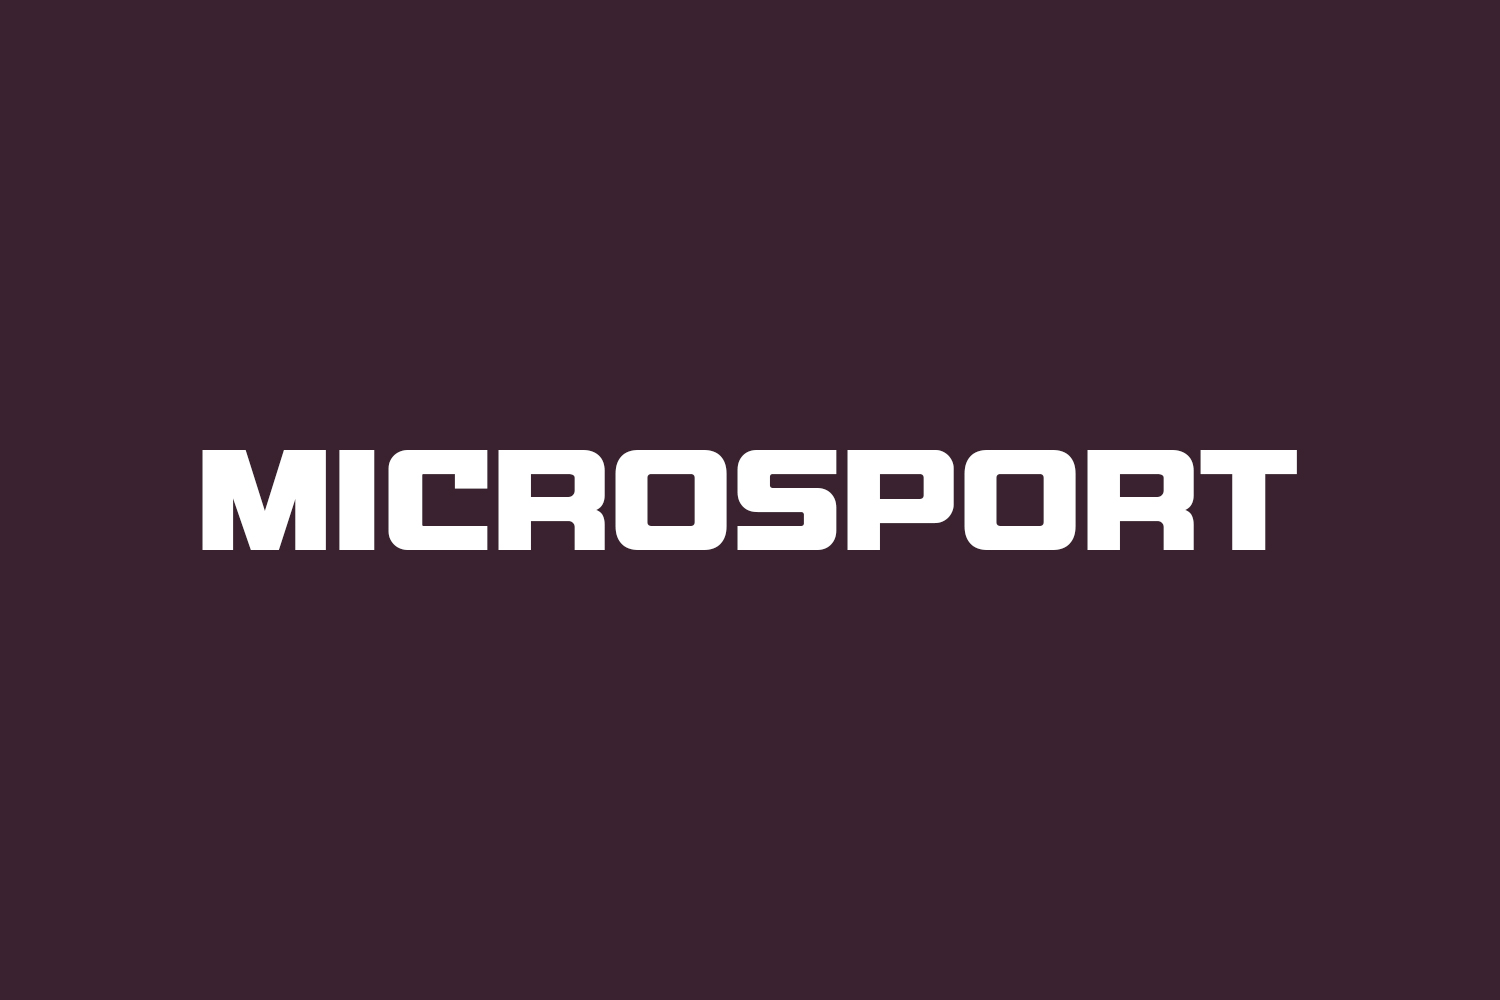 Microsport Free Font